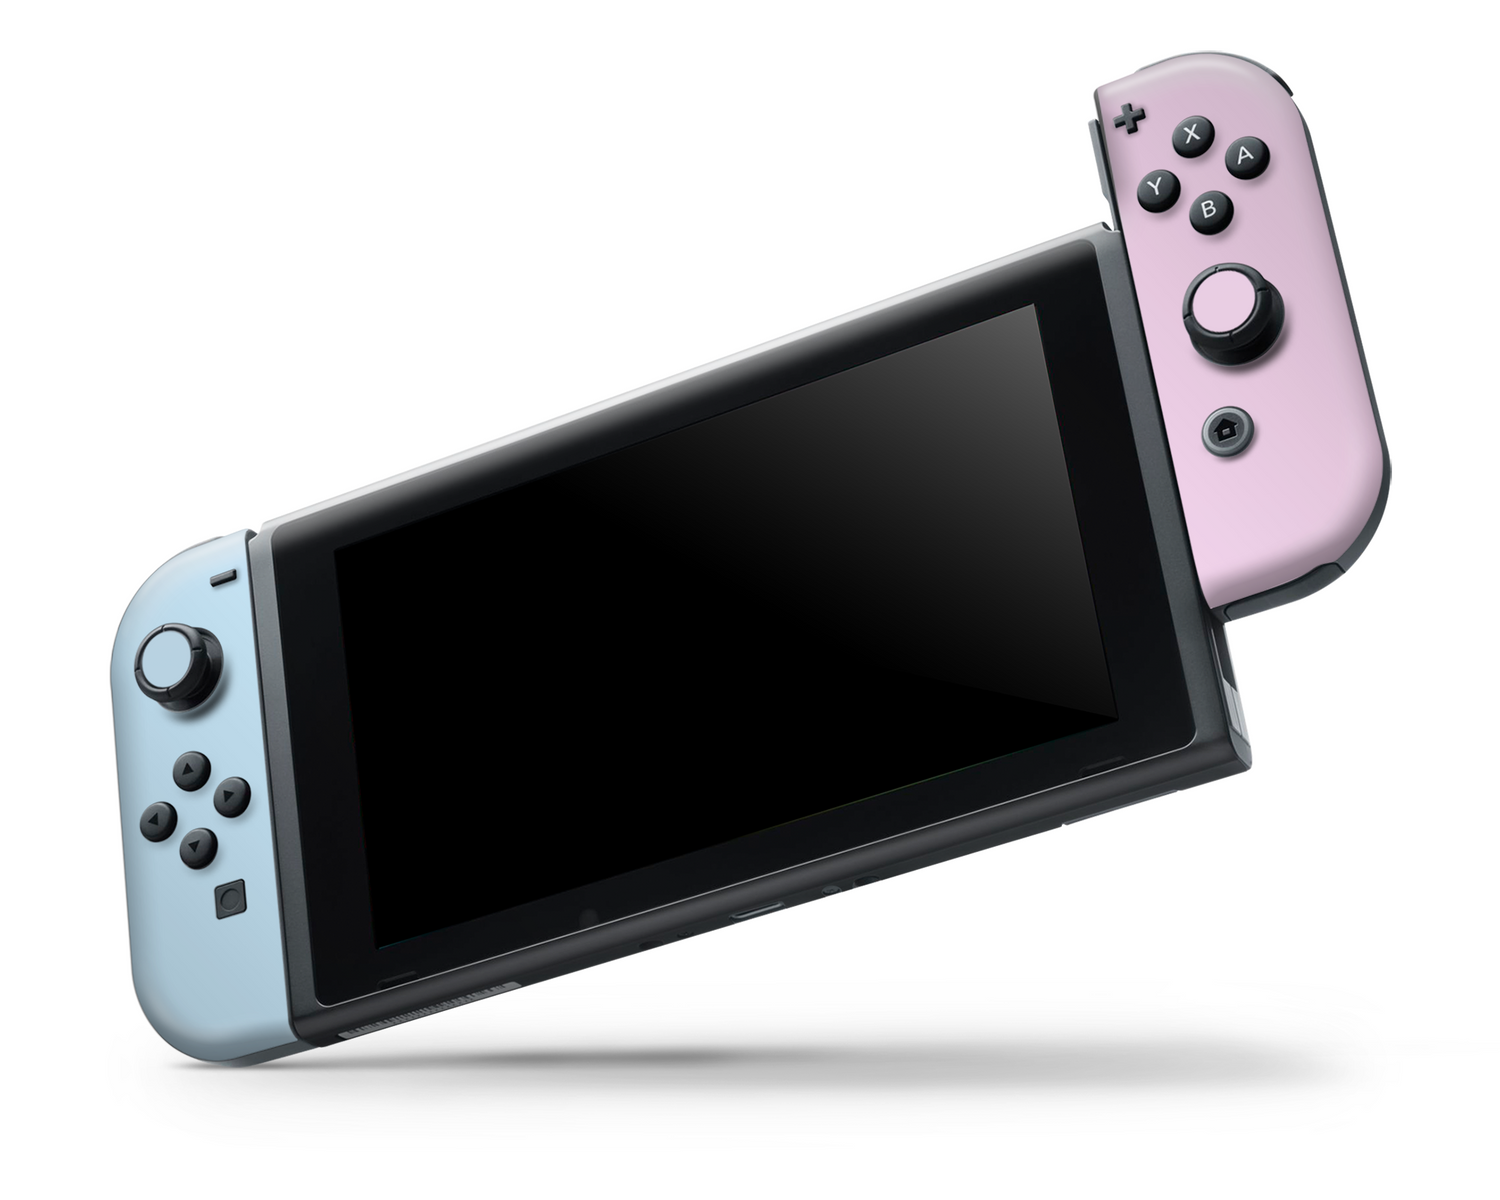 GRIS for Nintendo Switch - Nintendo Official Site